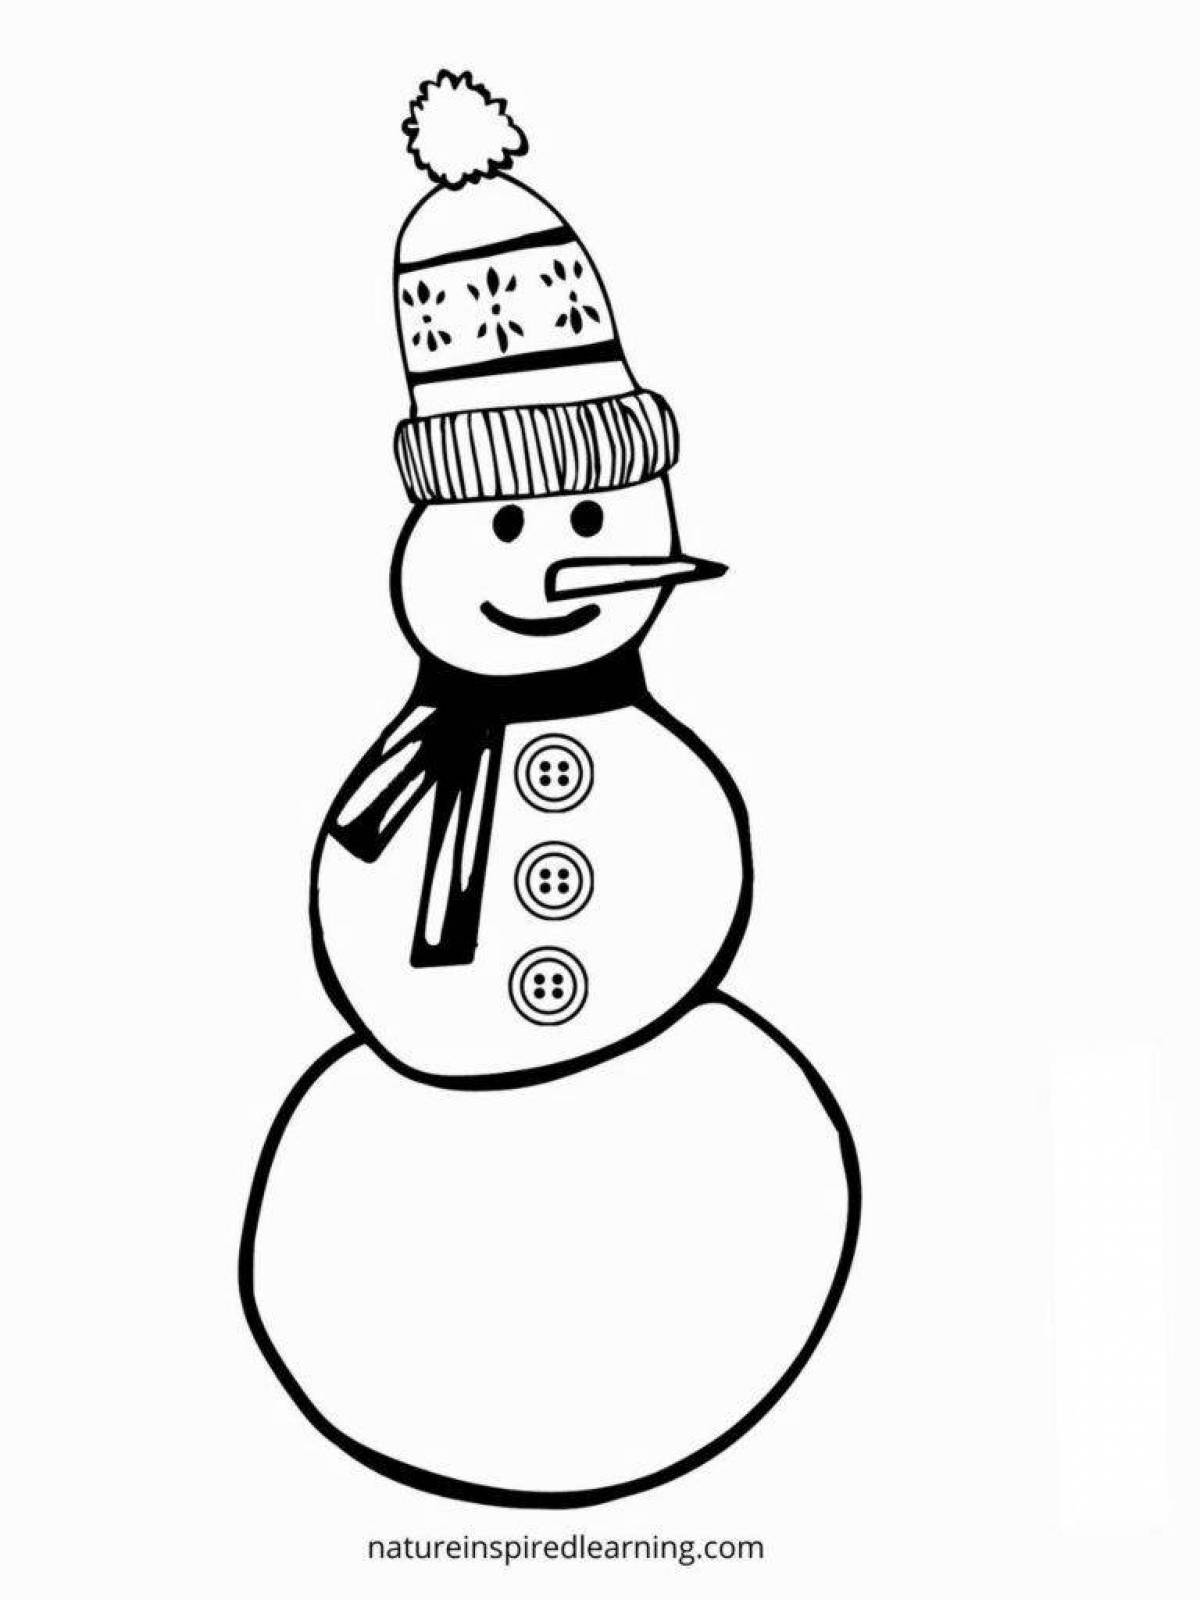 Fancy snowman antistress coloring book